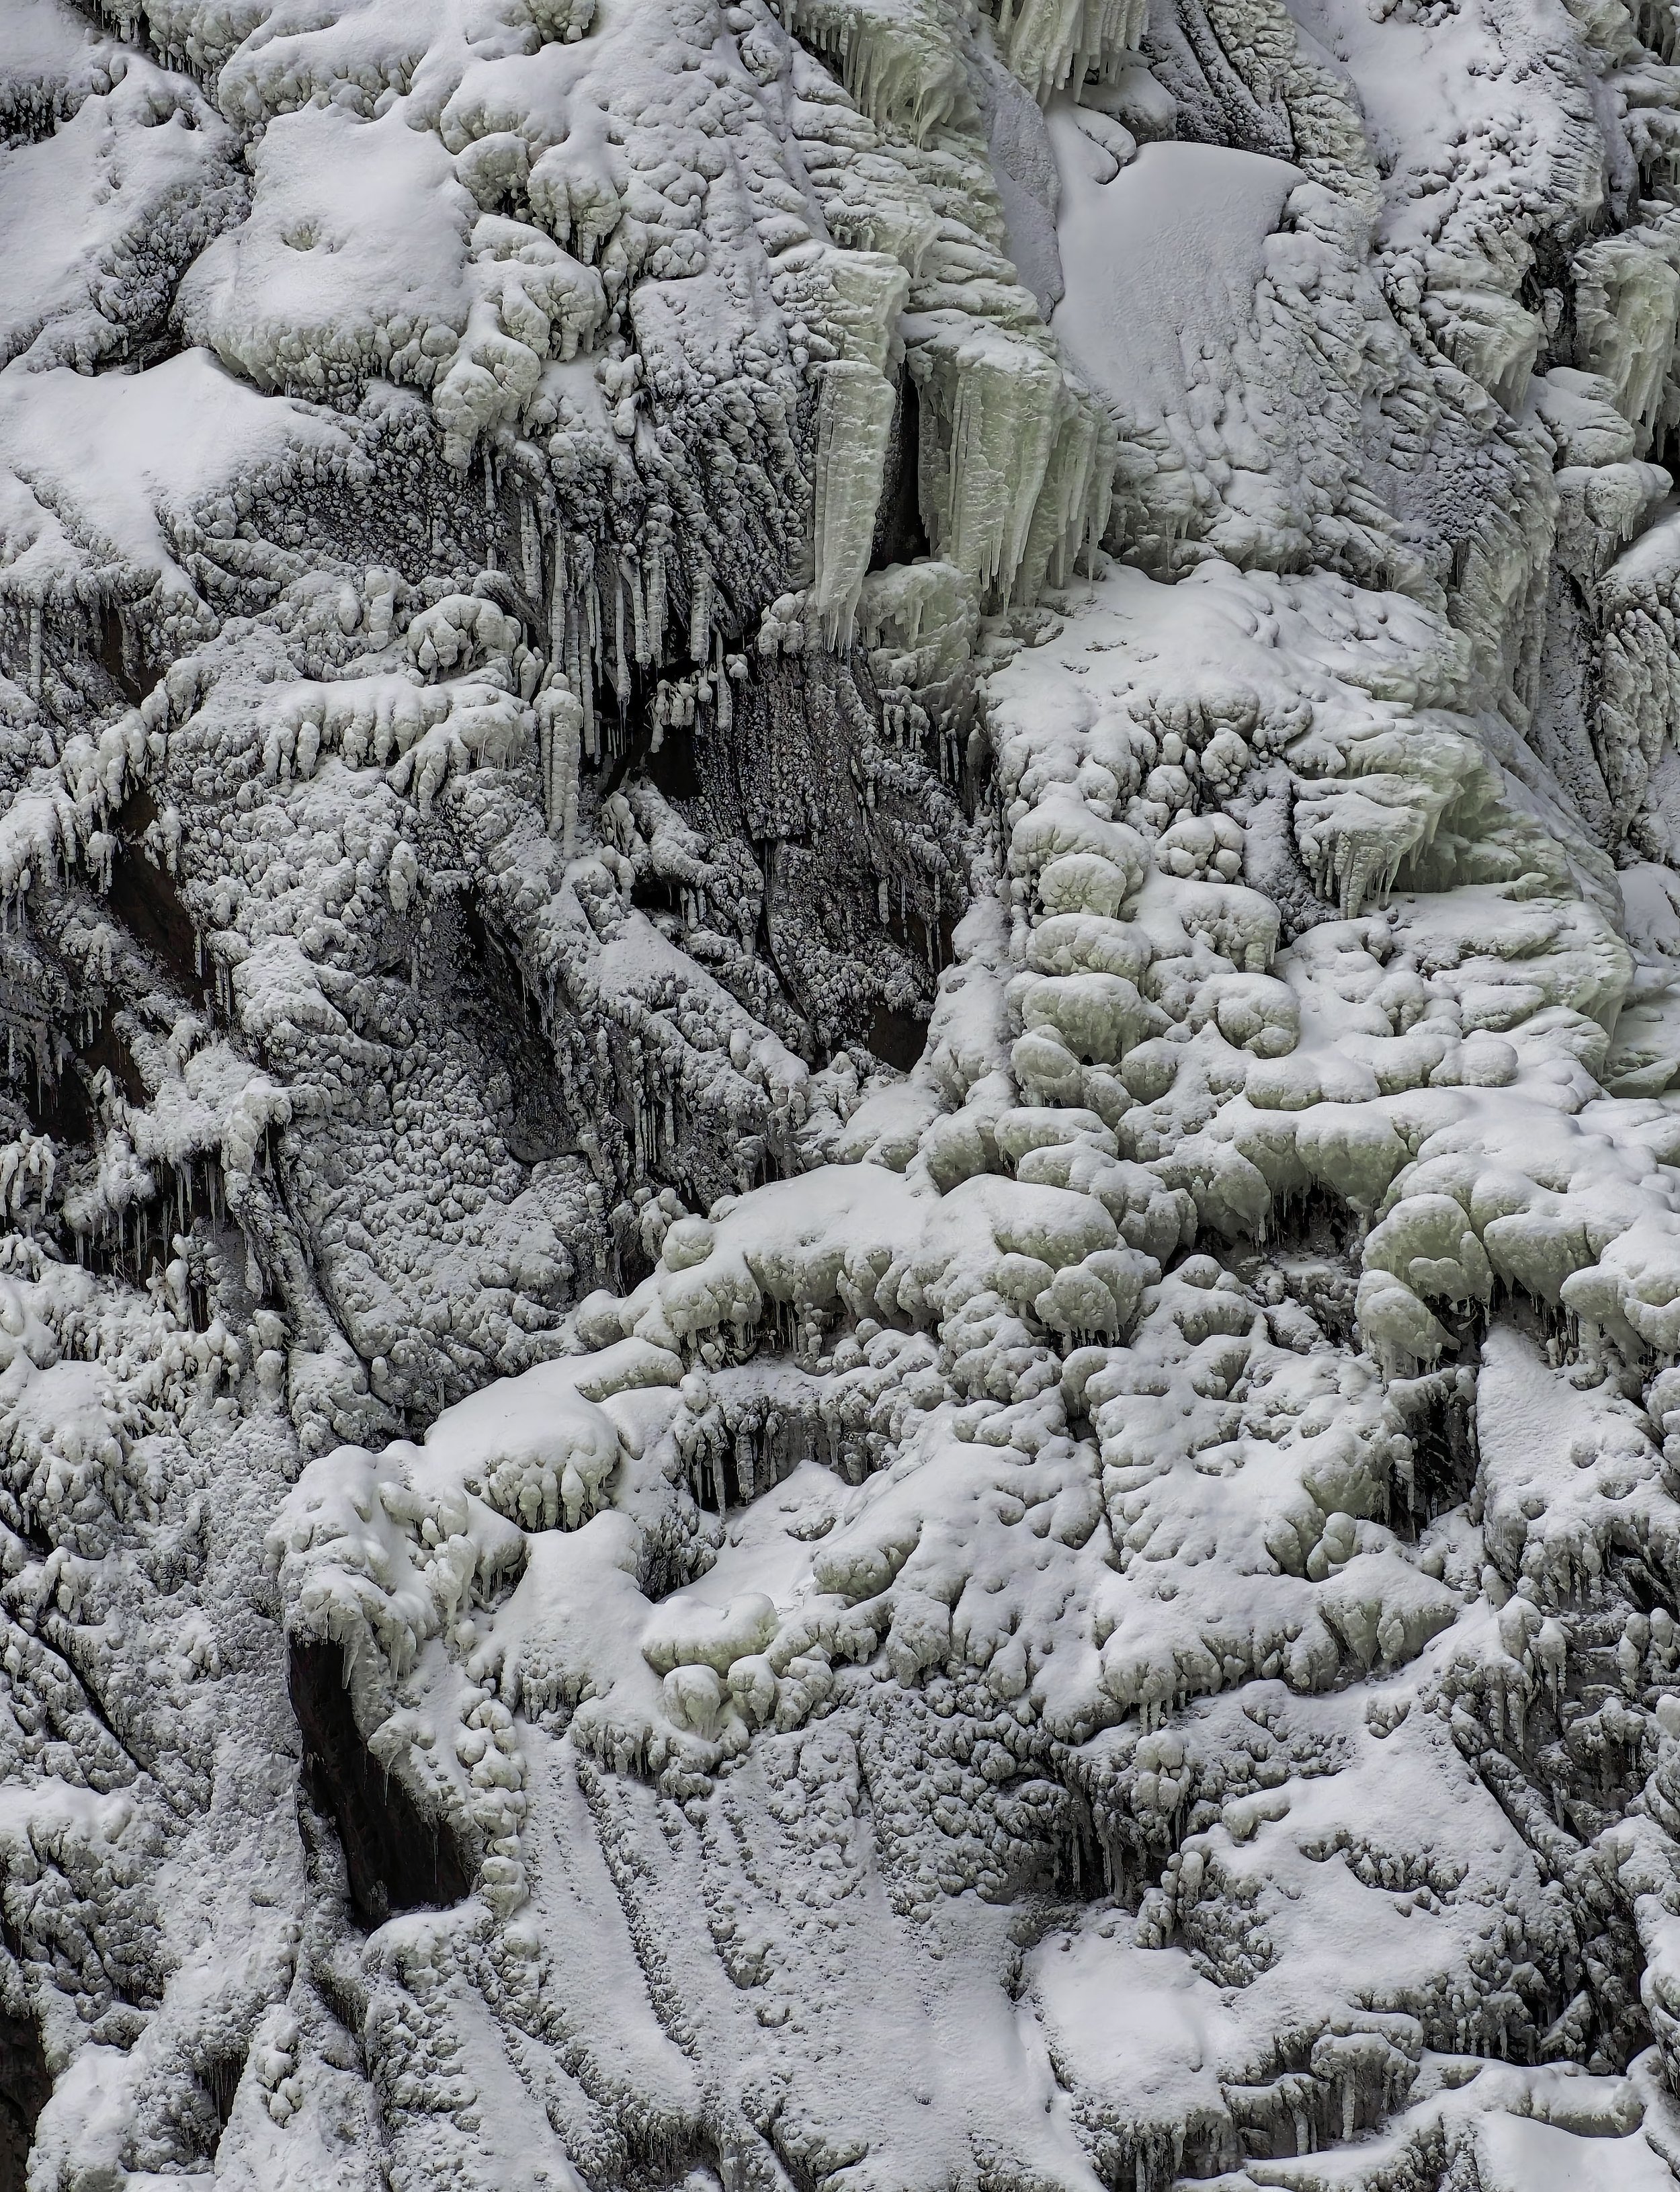  Frozen falls detail. Photo by Gordon Miller  